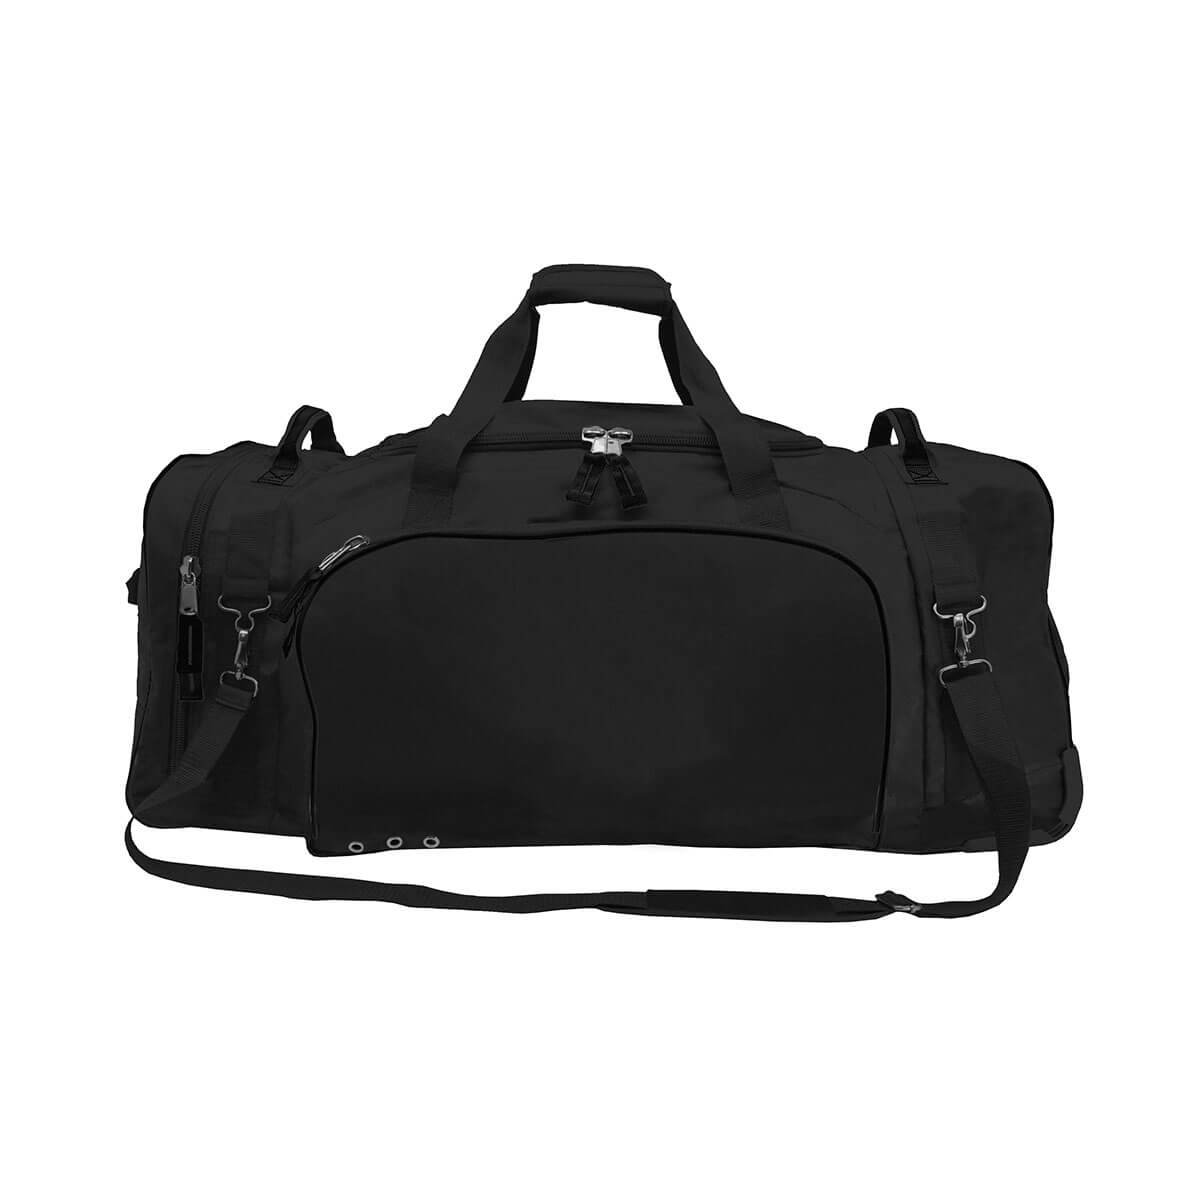 Sumo Sports Bag | Denier Nylon | Branded Sporty Travel Bags